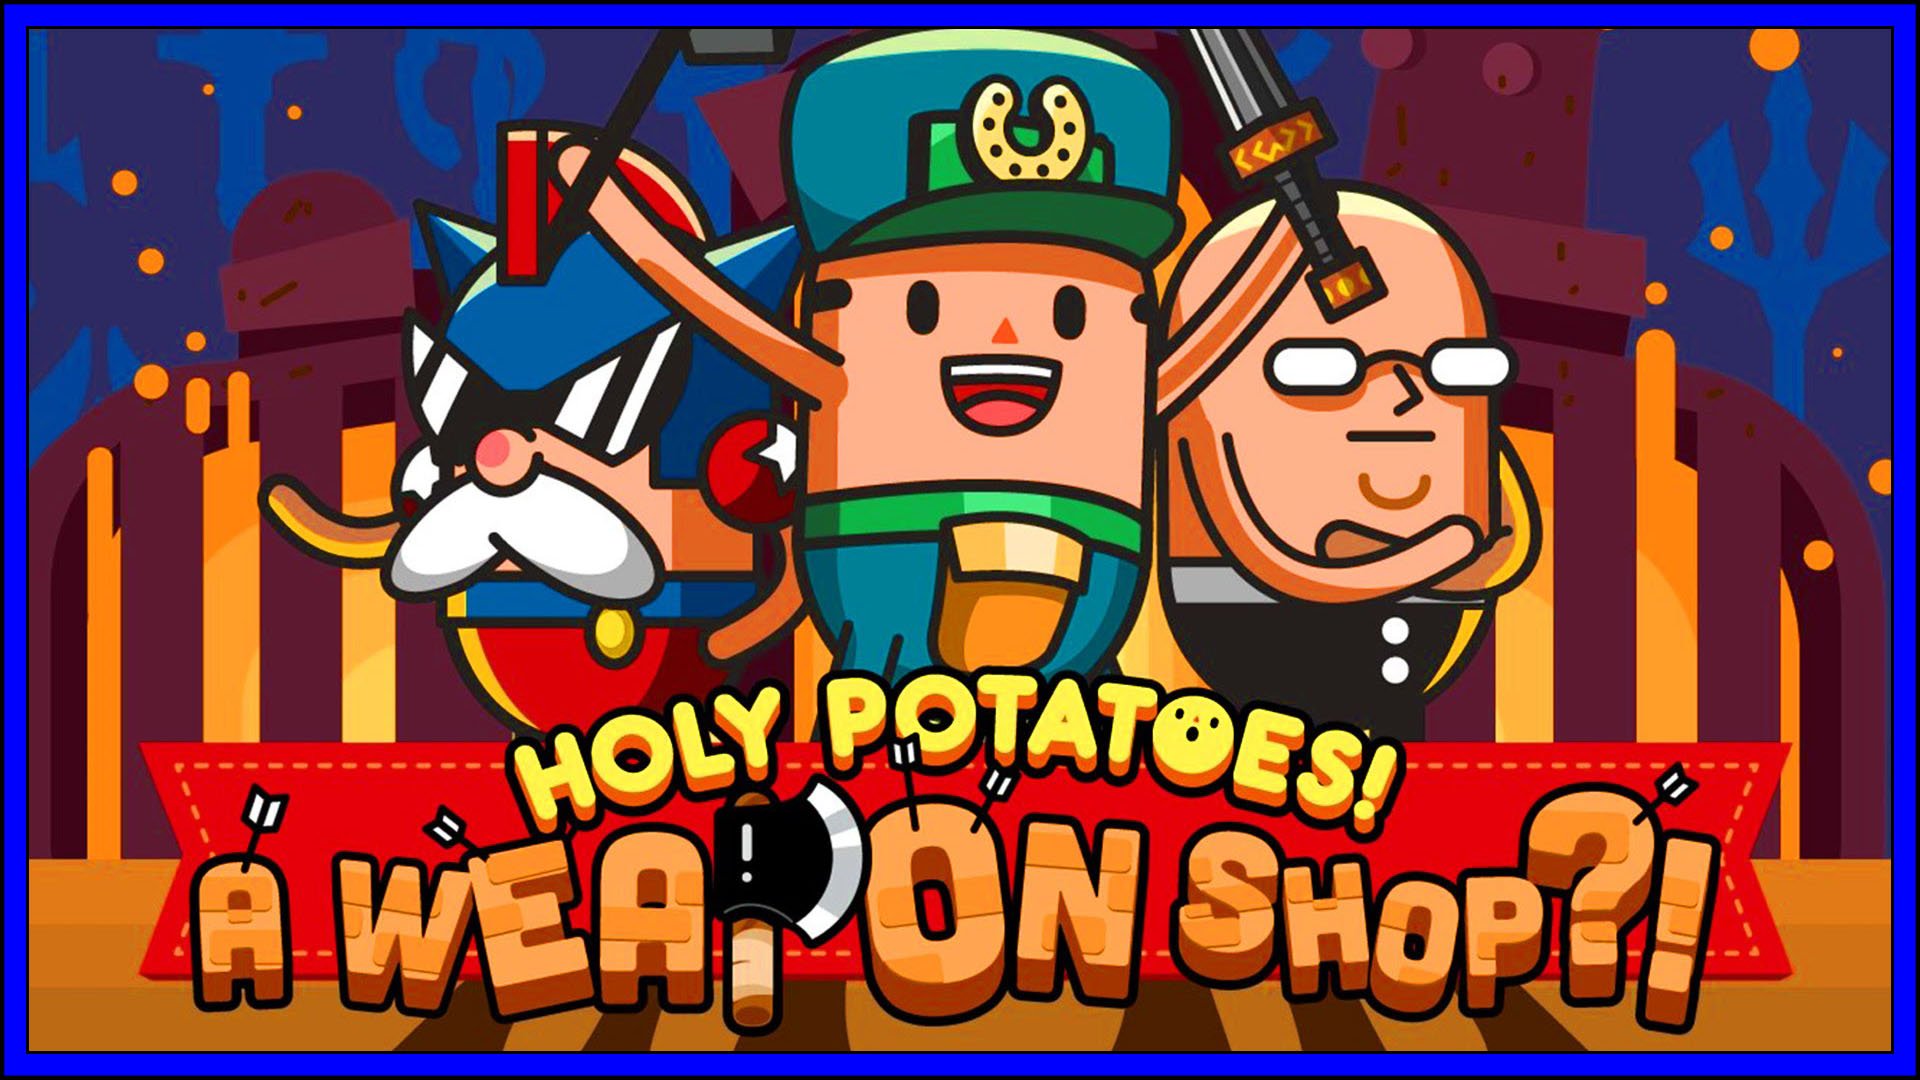 Holy Potatoes A Weapon Shop Fi3